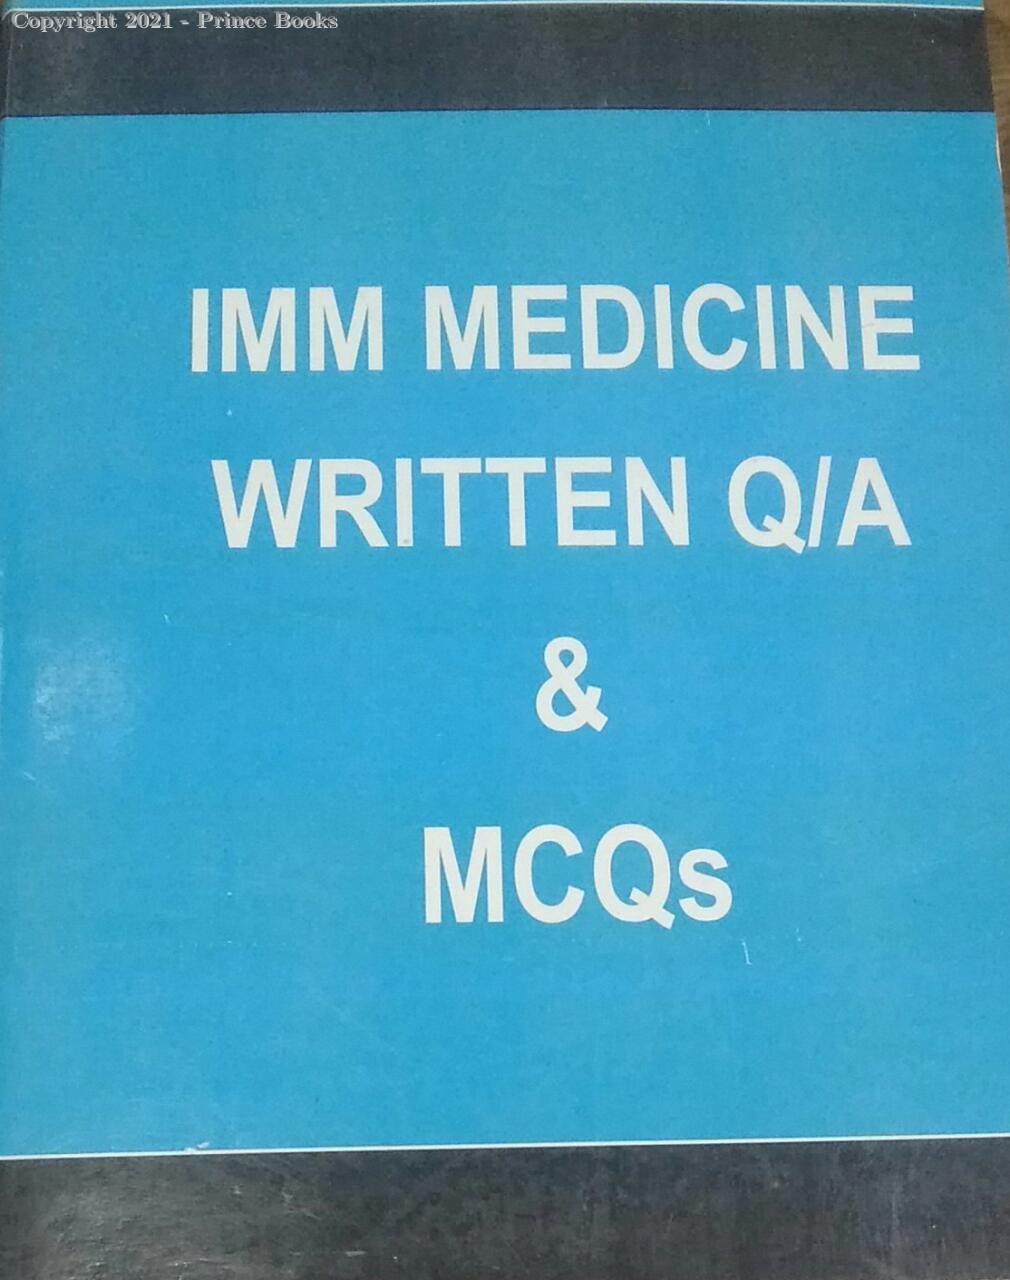 IMM MEDICINE WRITTEN Q/A & MCQS